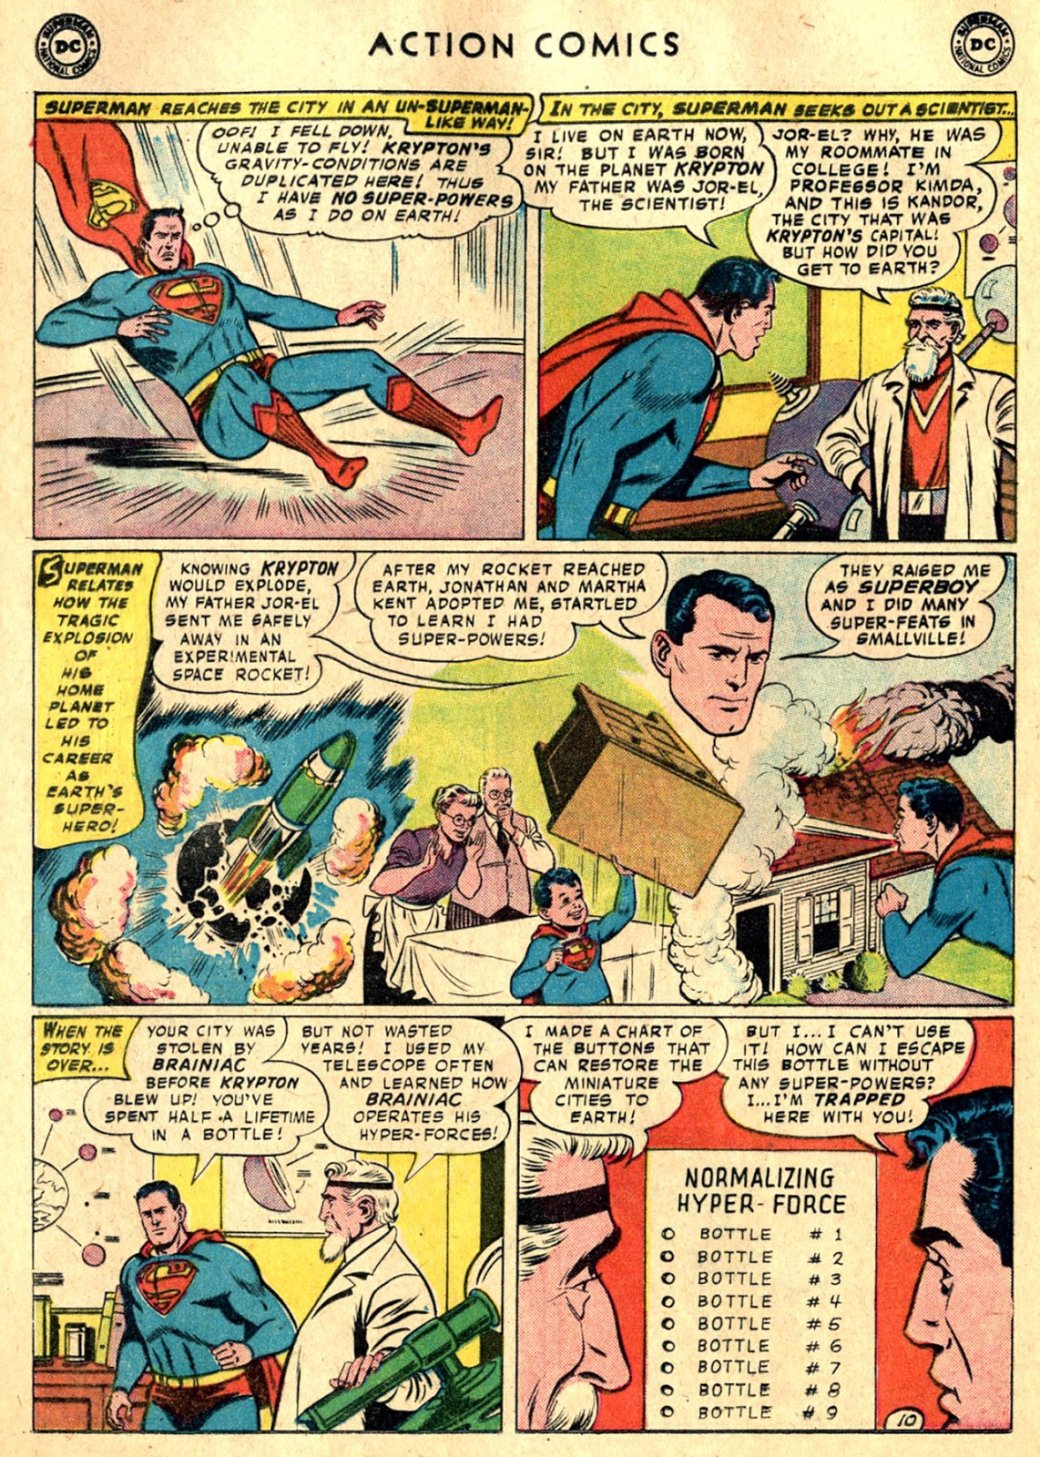 Галерея История Супермена и эволюция его образа в комиксах - 2 фото